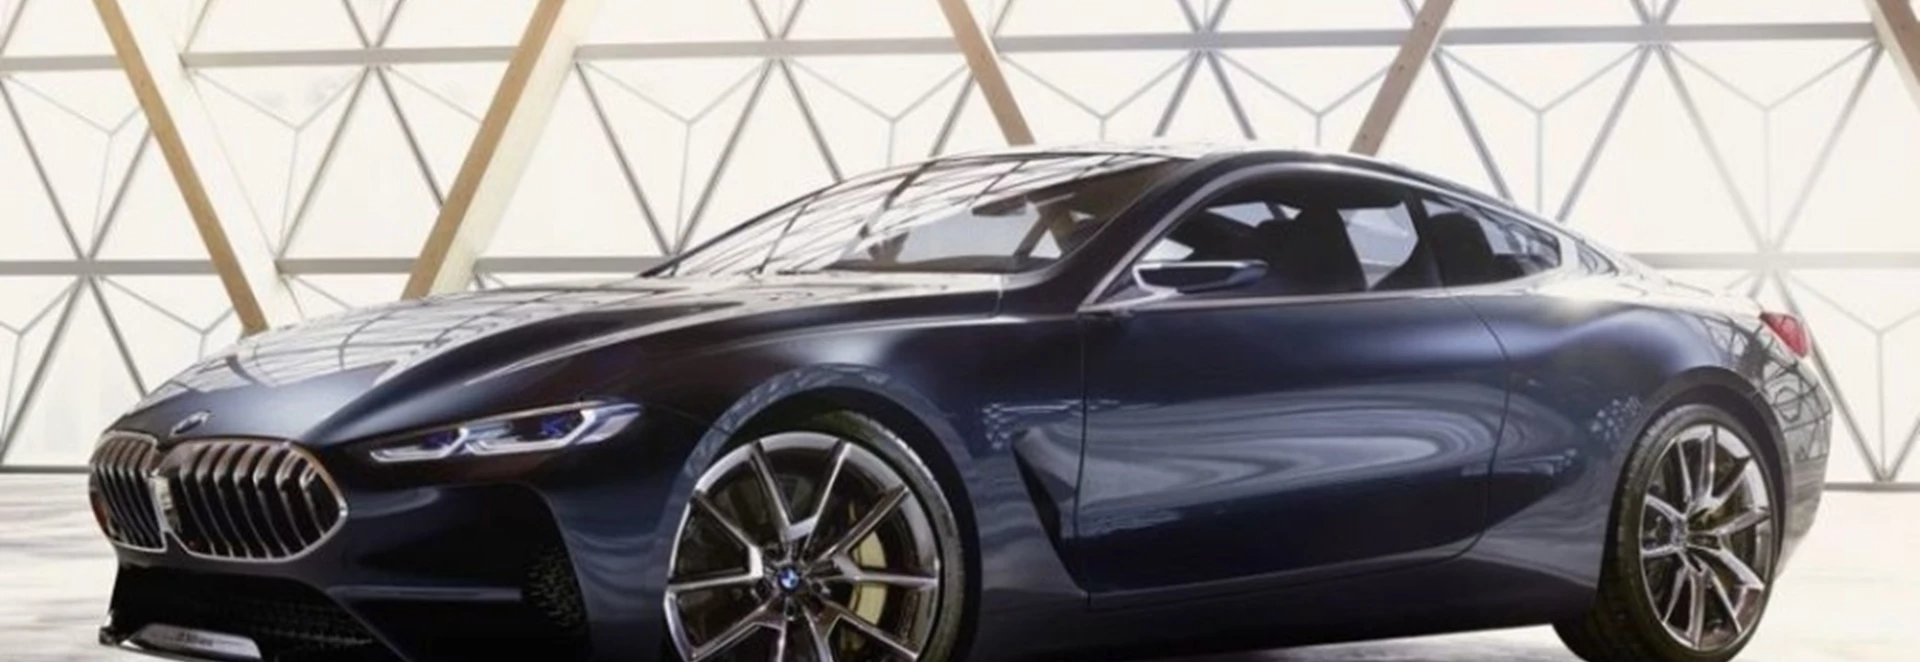 New BMW 8 Series teased via striking new concept car